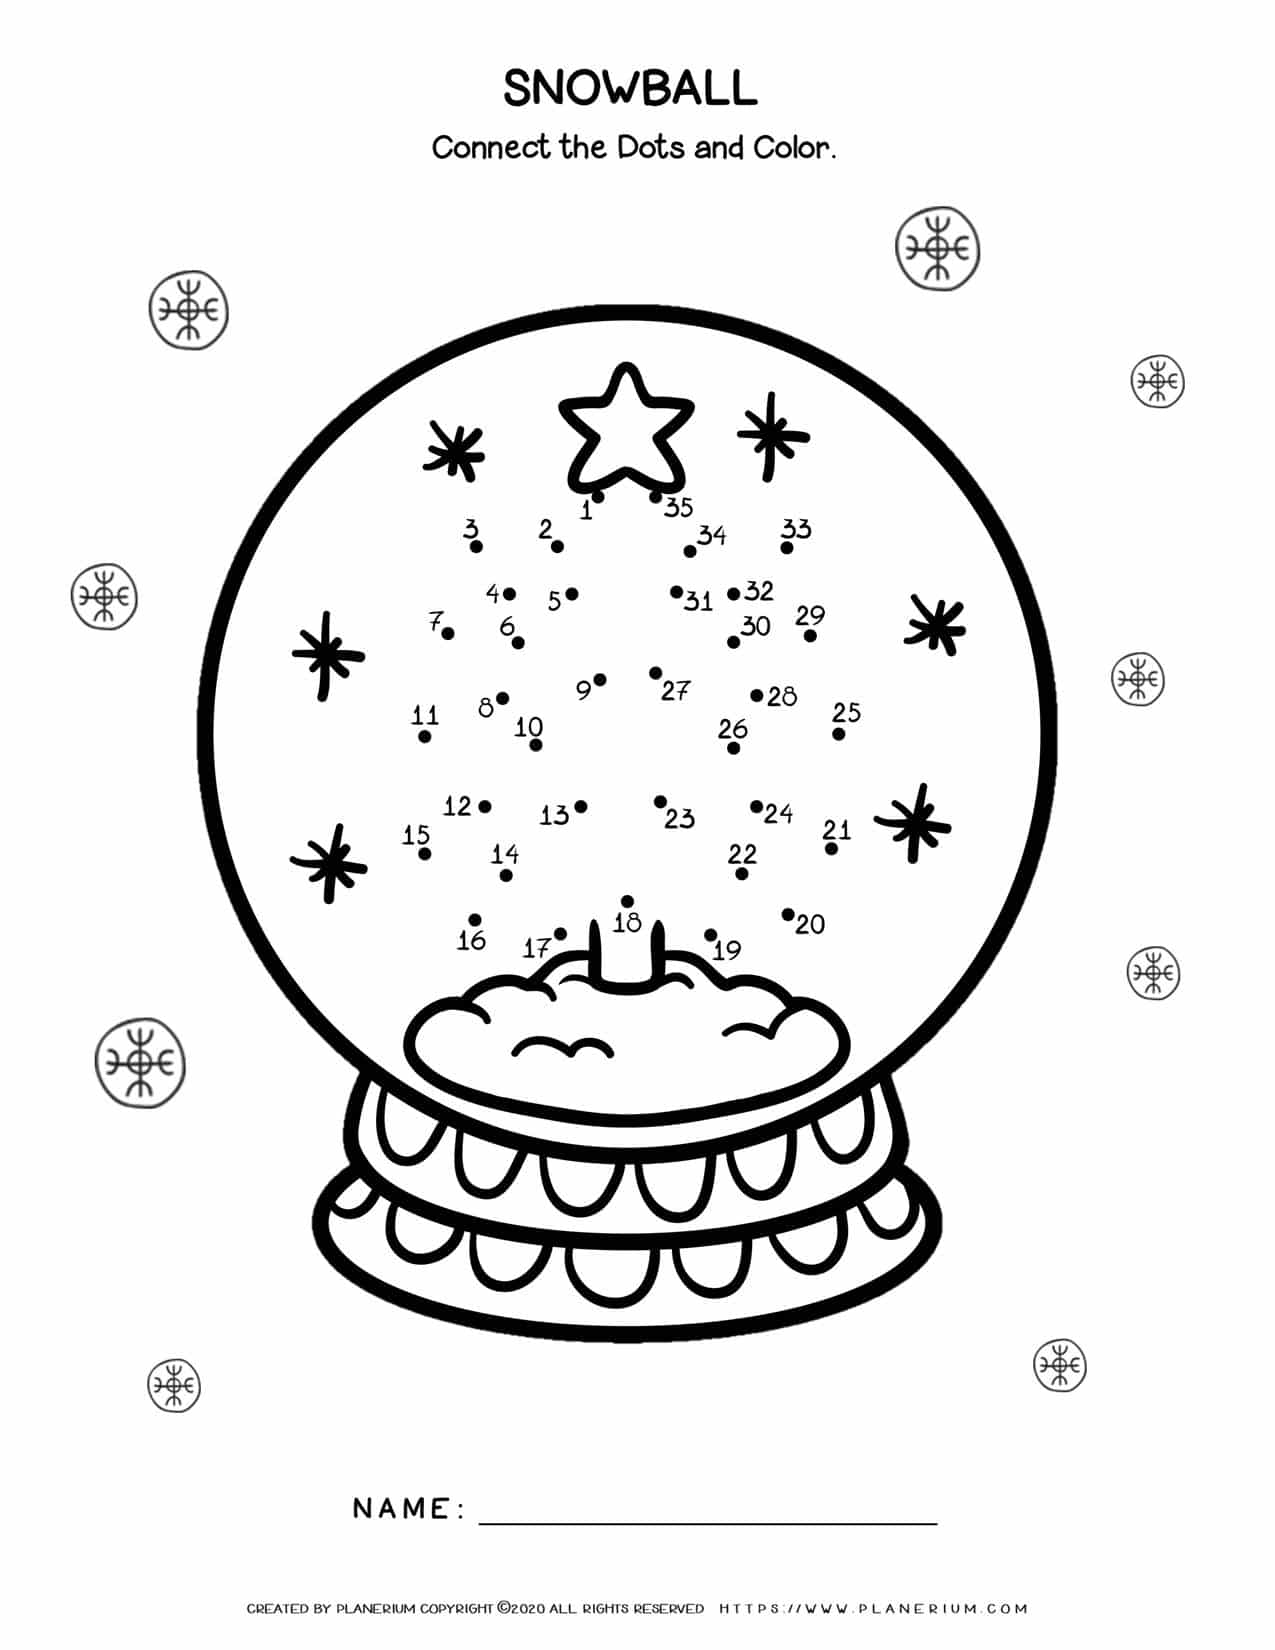 Snowball Dot to Dot - Christmas worksheet - Free Printable | Planerium